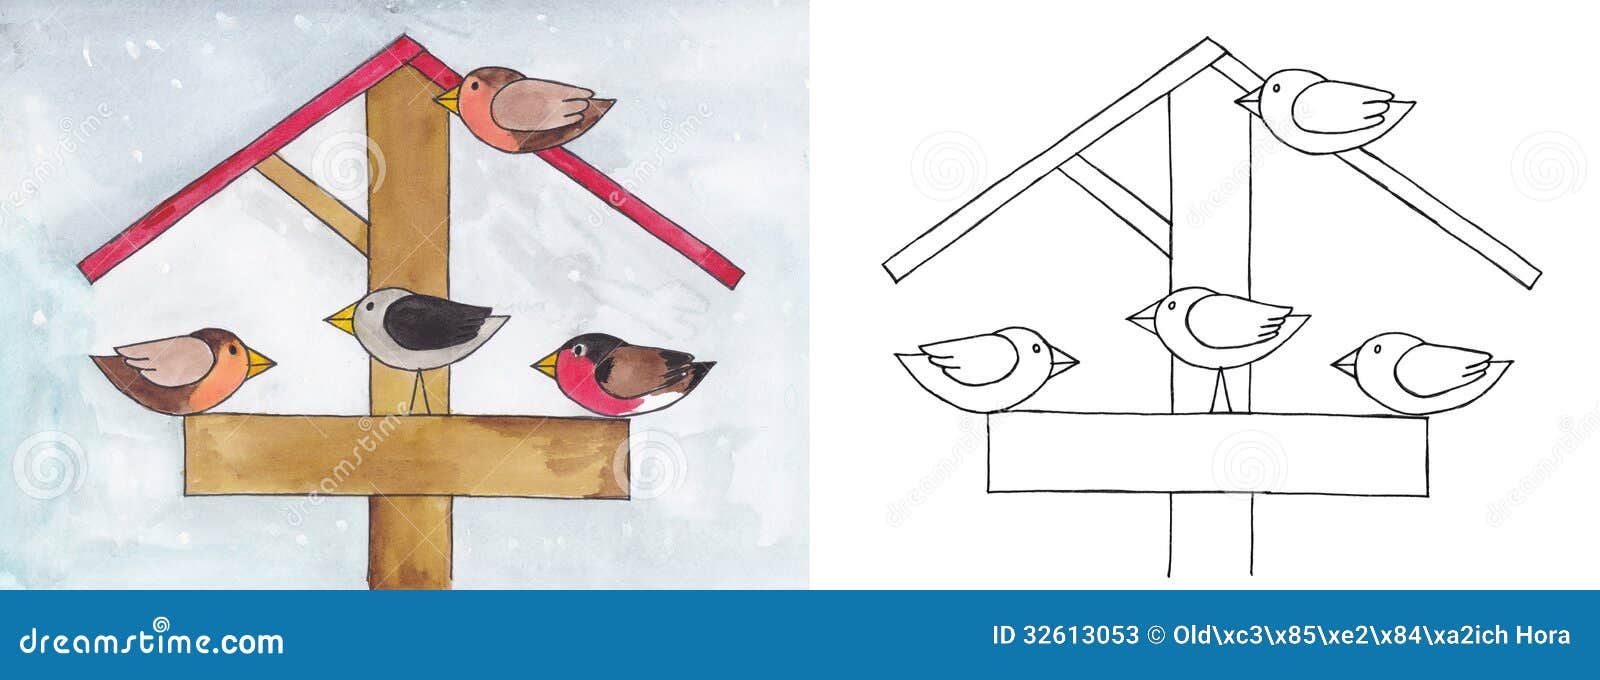 Download Birds in the feeder stock illustration. Illustration of ...